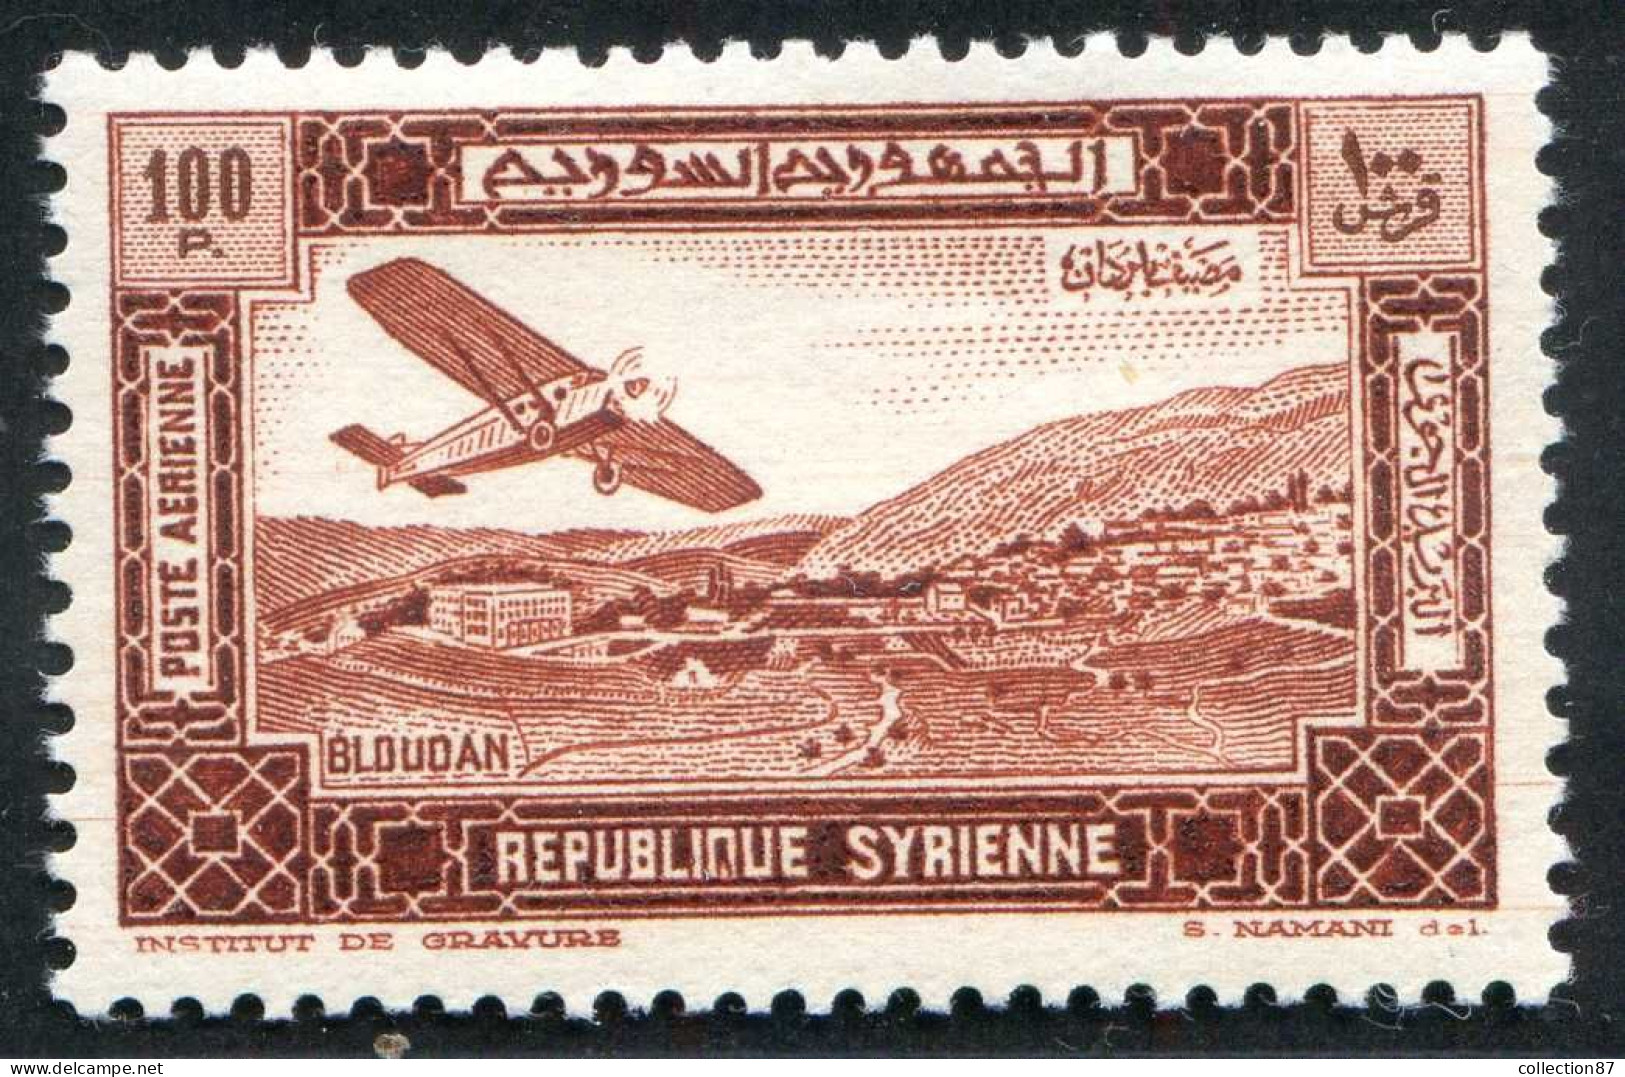 REF 086 > SYRIE < PA N° 69 * < Neuf Quasi Invisible Voir Dos - MH * < Poste Aérienne - Aéro - Air Mail - Luftpost